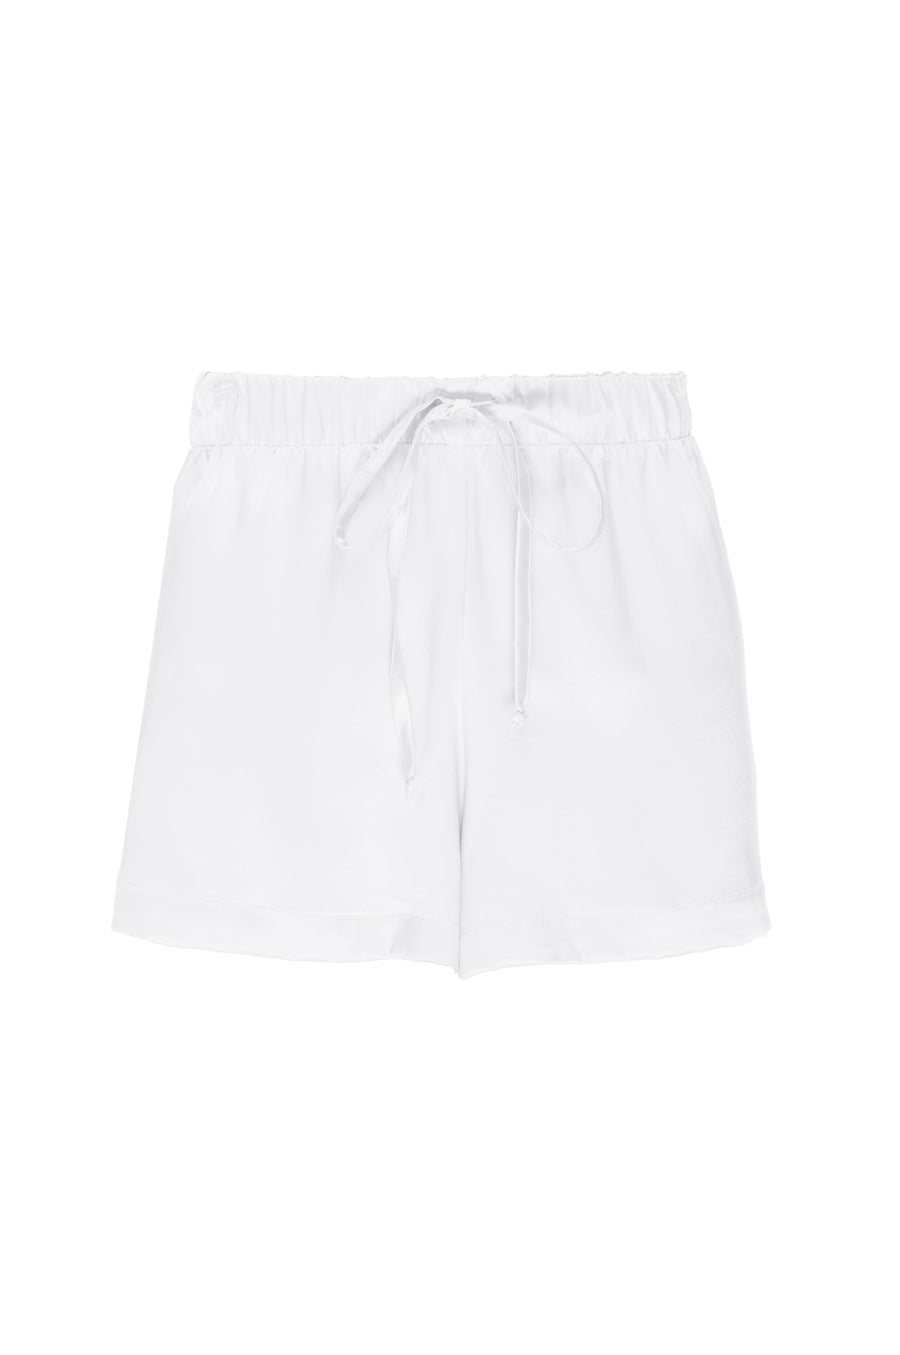 Silk Charmeuse Shorts:  Ivory